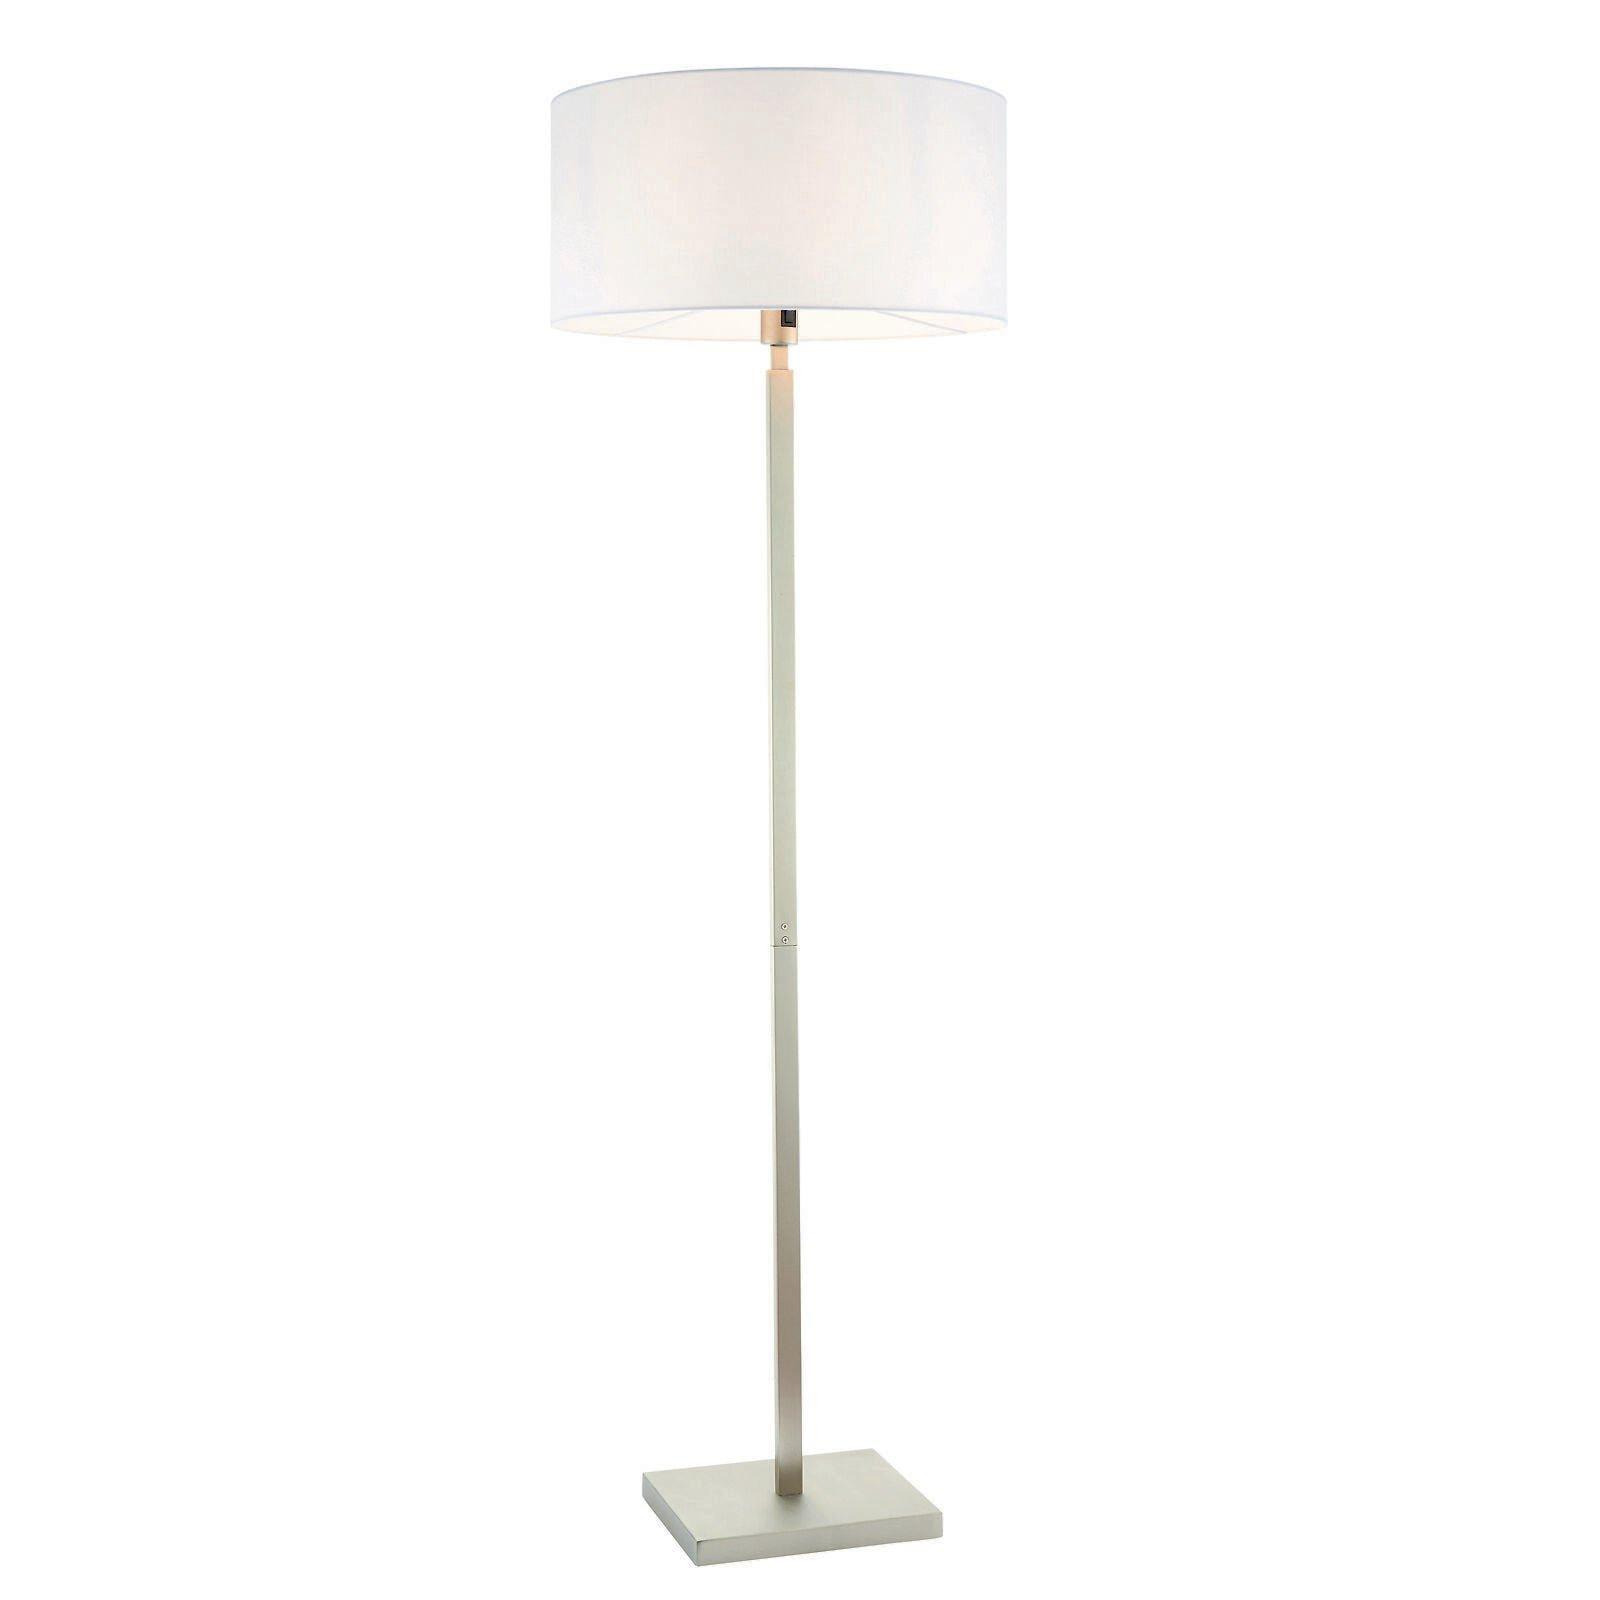 Floor Lamp Light Matt Nickel & Vintage White Fabric 60W E27 Base & Shade - image 1